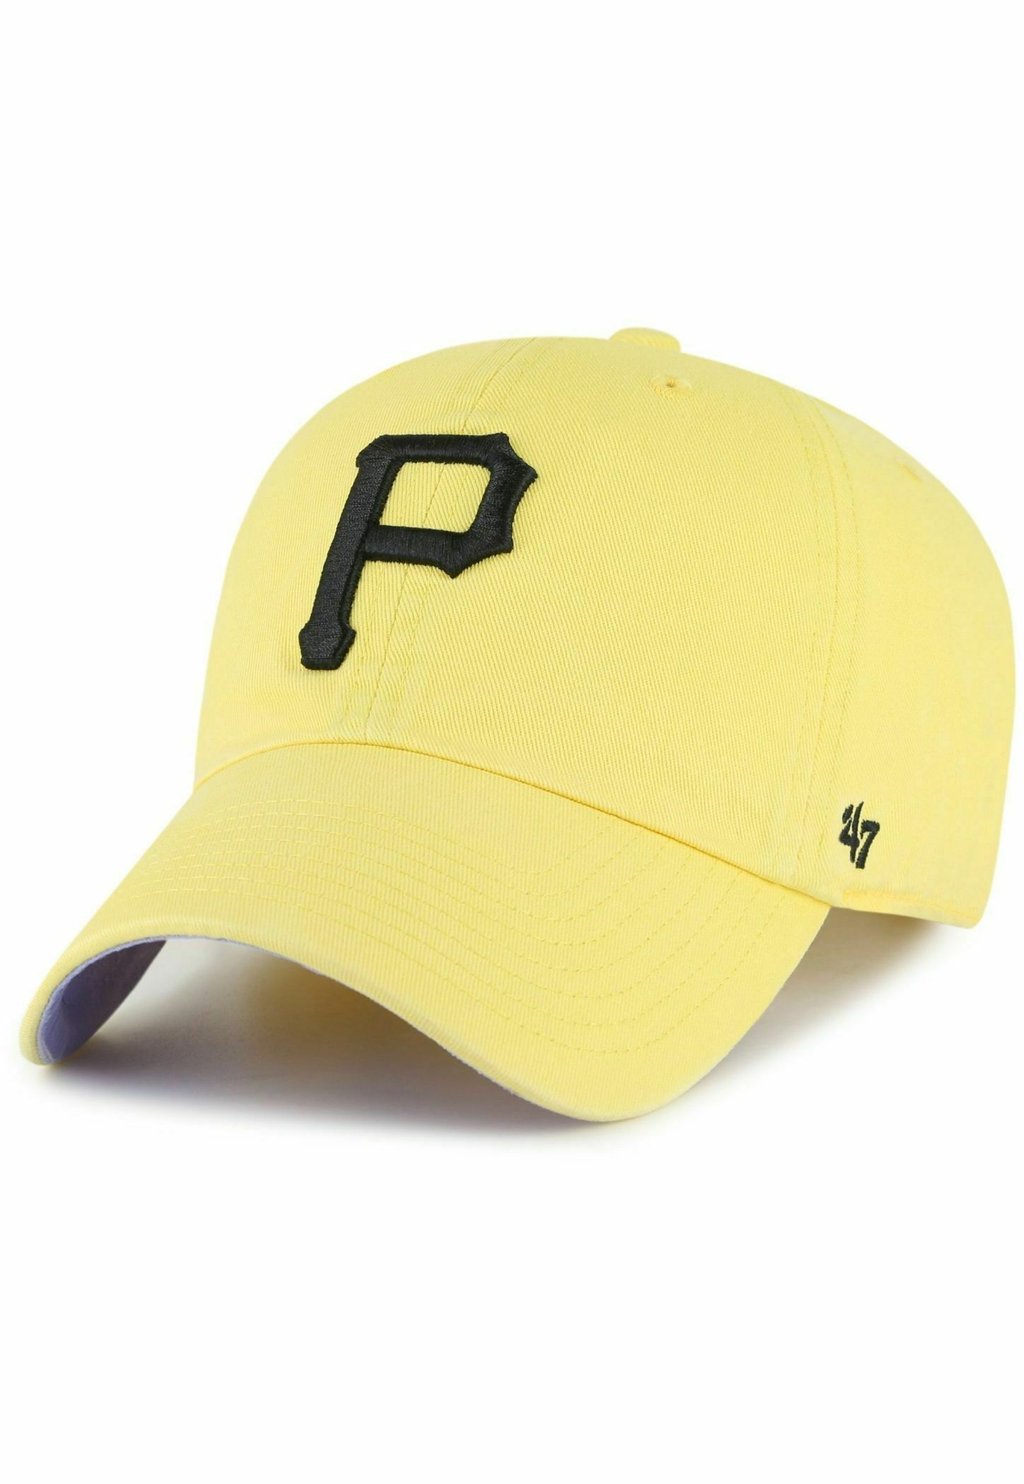 Бейсболка STRAPBACK ALL STAR GAME PITTSBURGH PIRATES '47, цвет yellow